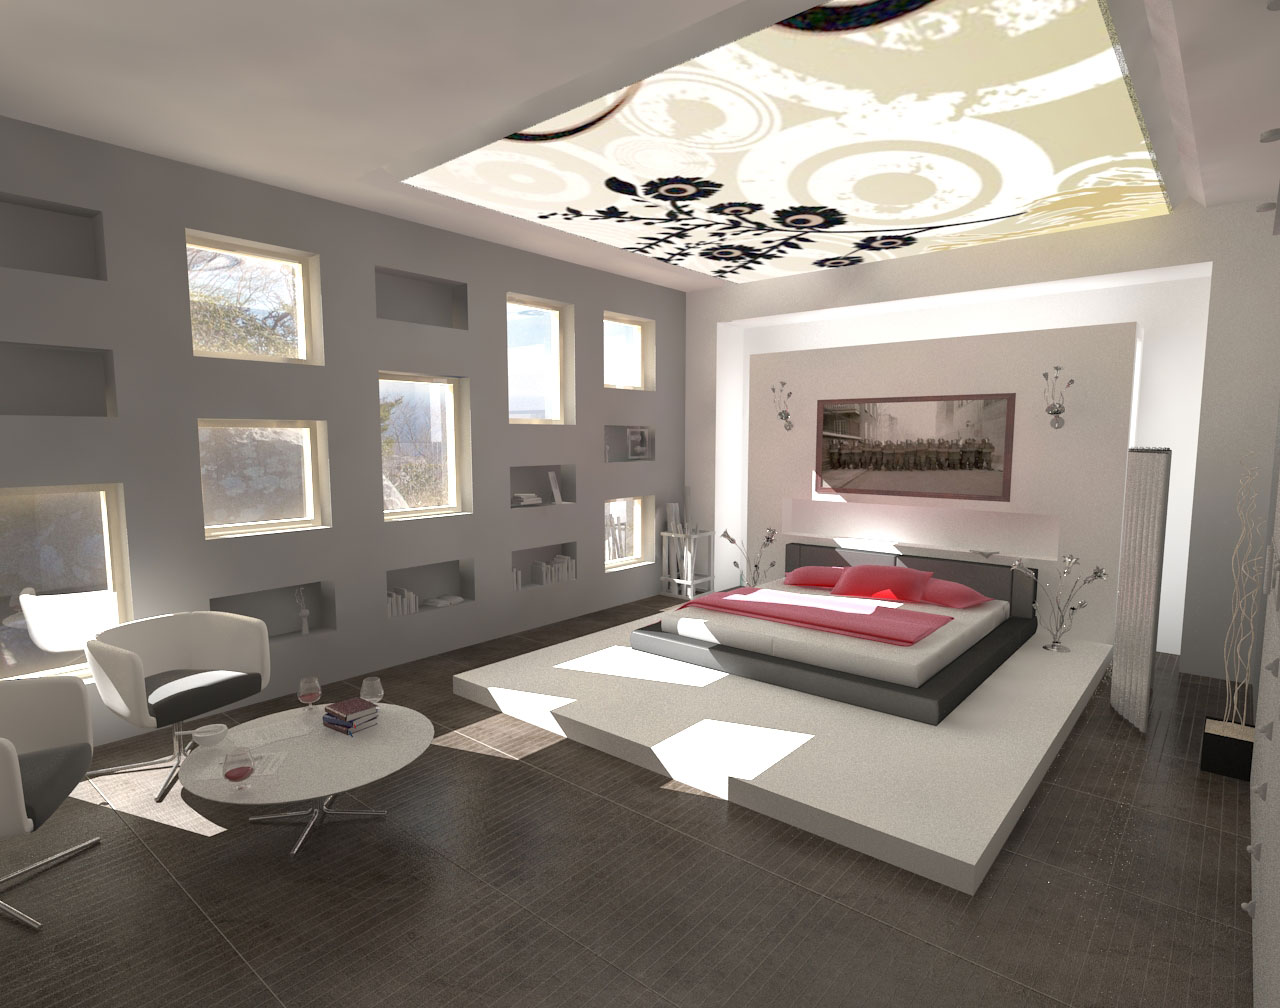 Decorations: Minimalist Design - Modern Bedroom Interior Design Ideas